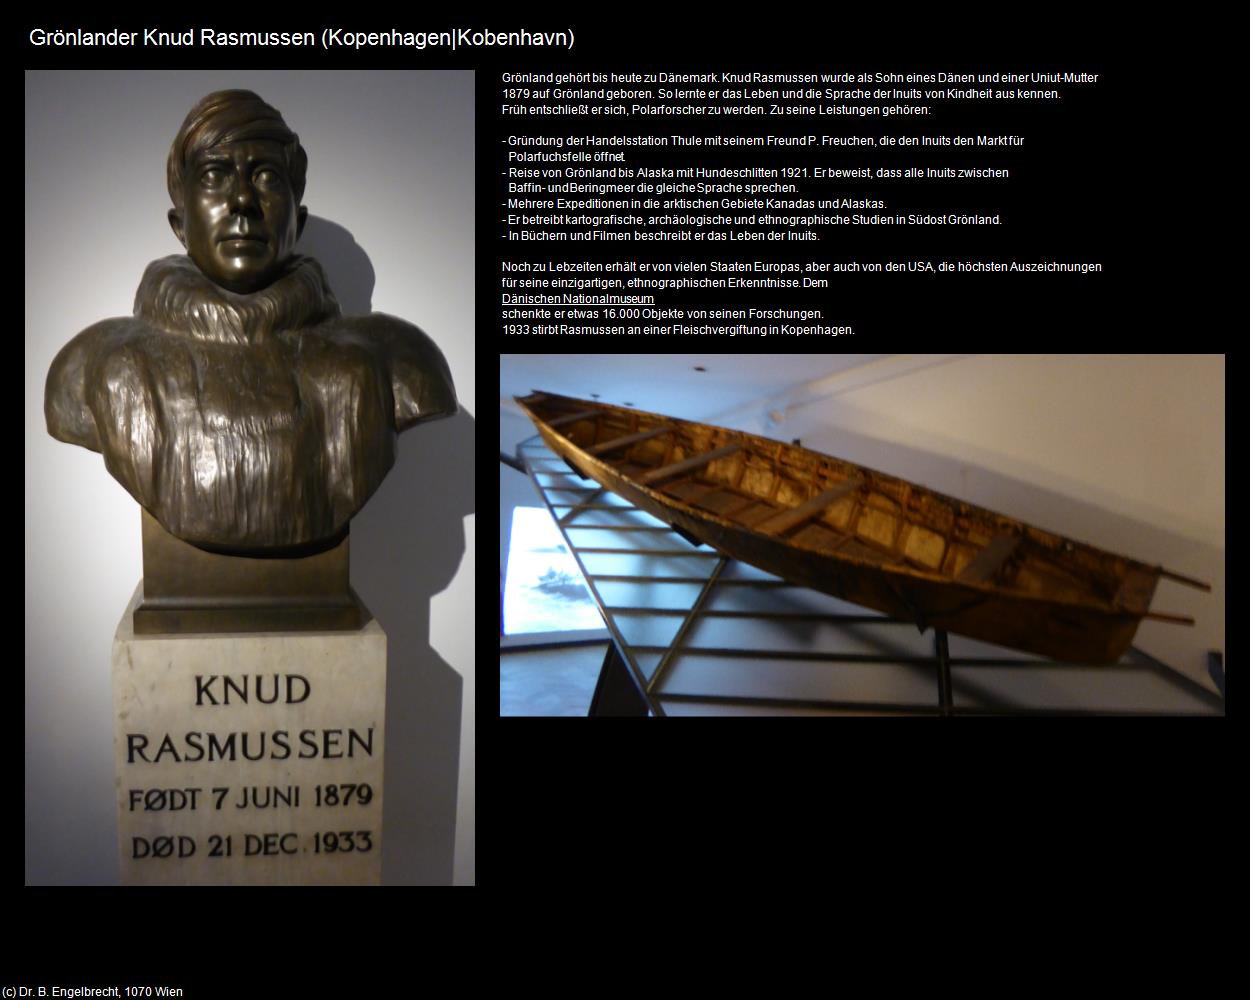 Grönlander Knud Rasmussen (Kopenhagen|Köbenhavn) in Kulturatlas-REISE nach NORWEGEN(c)B.Engelbrecht